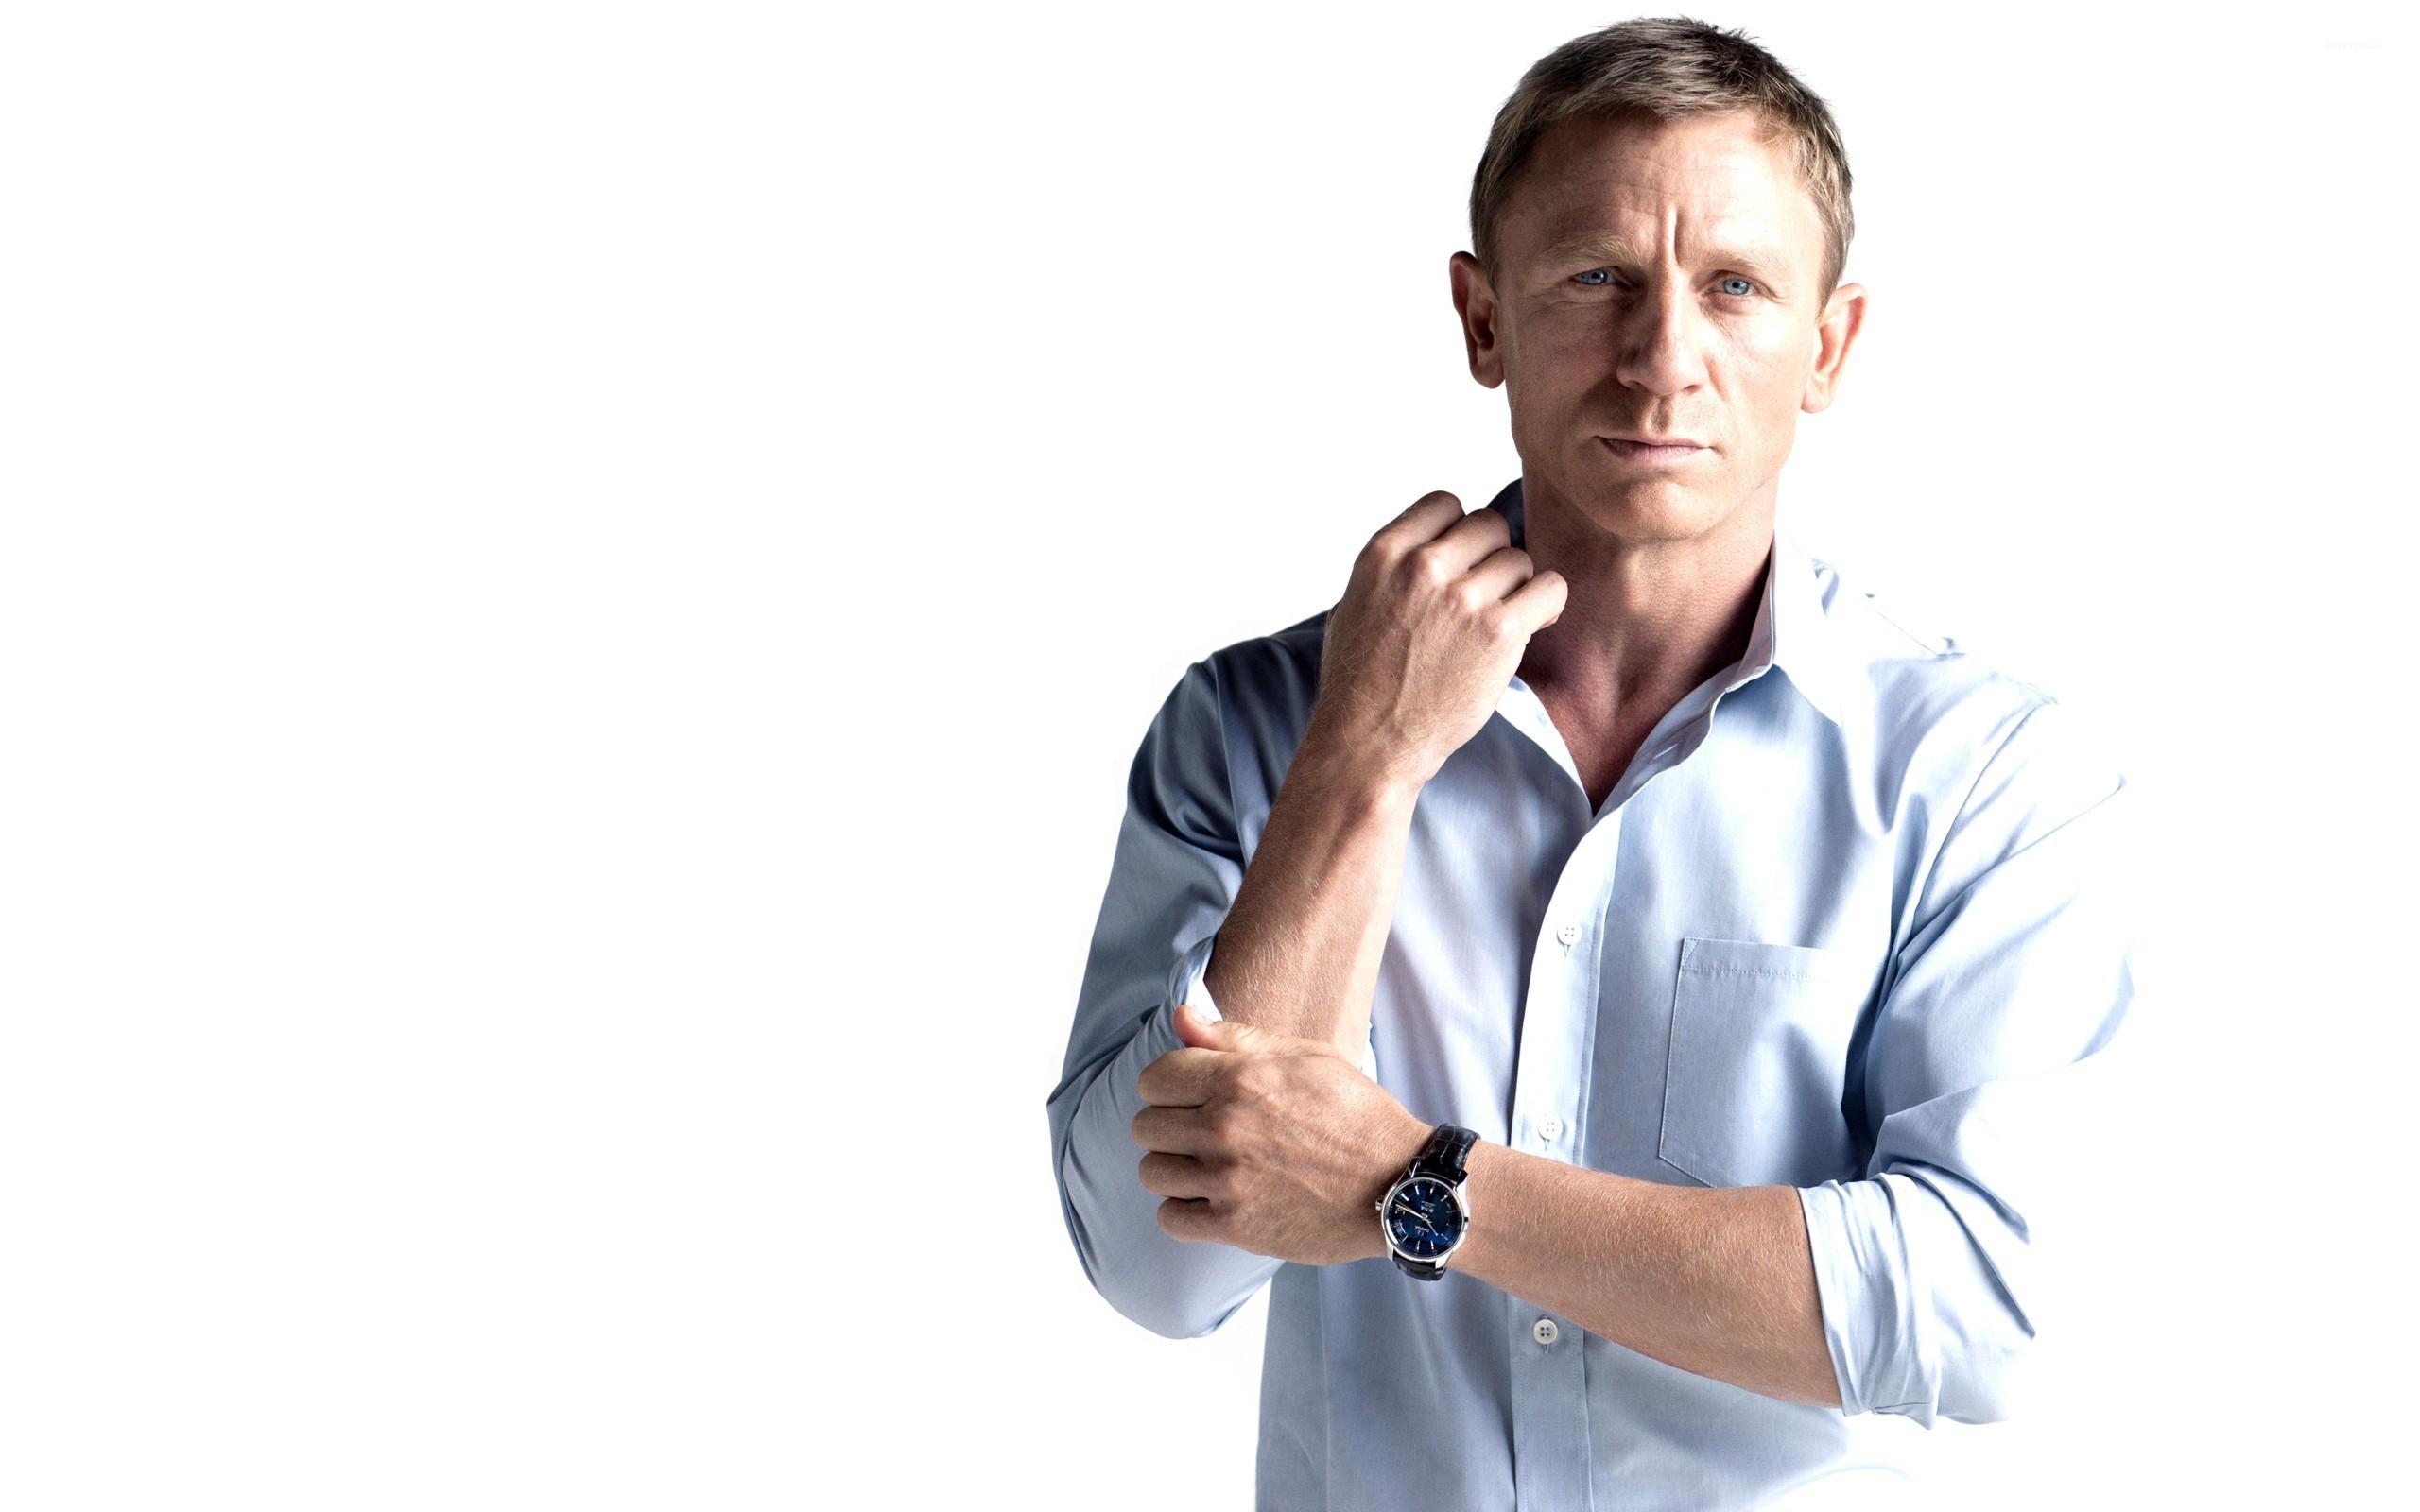 Movies Daniel Craig in Skyfall wallpaper Desktop, Phone, Tablet